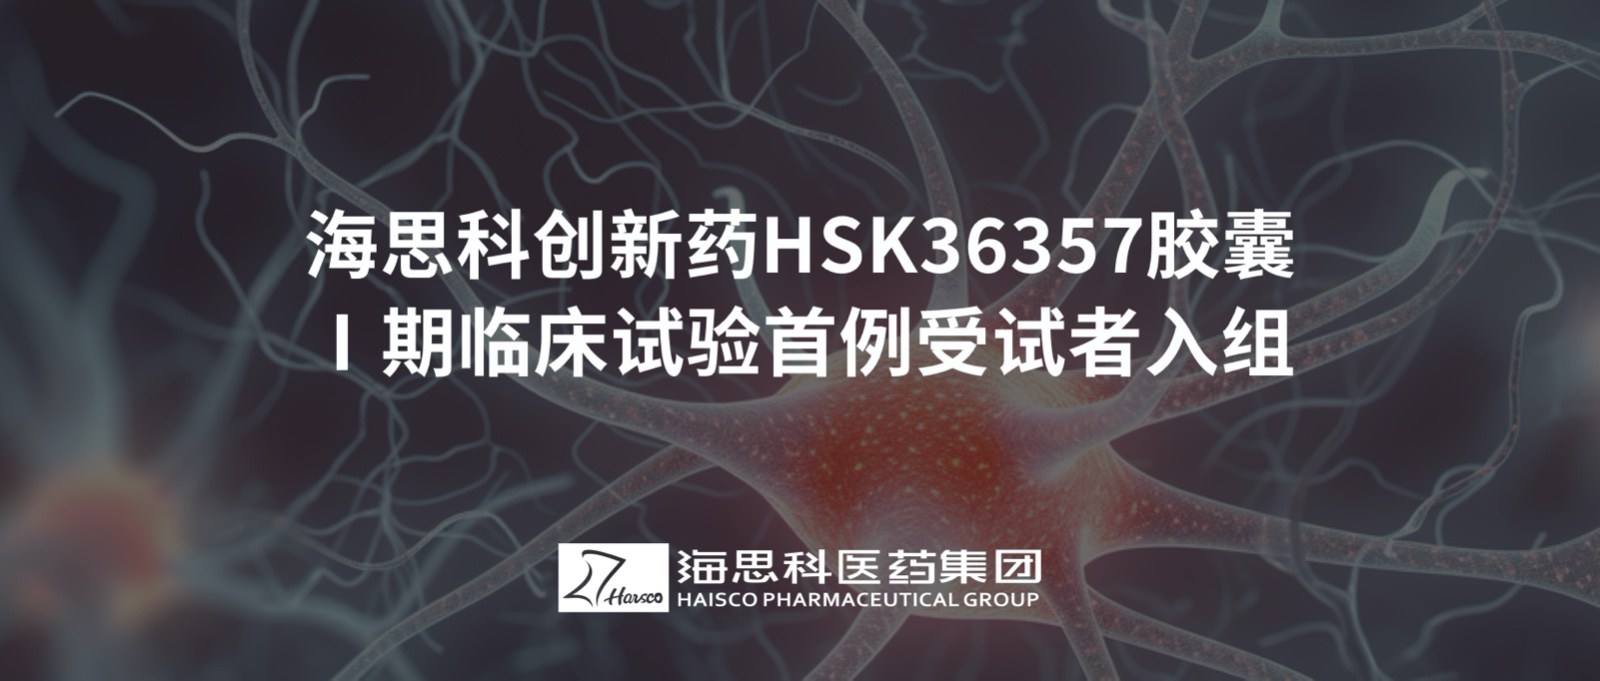 BET体育365投注官网创新药HSK36357胶囊Ⅰ期临床试验首例受试者入组